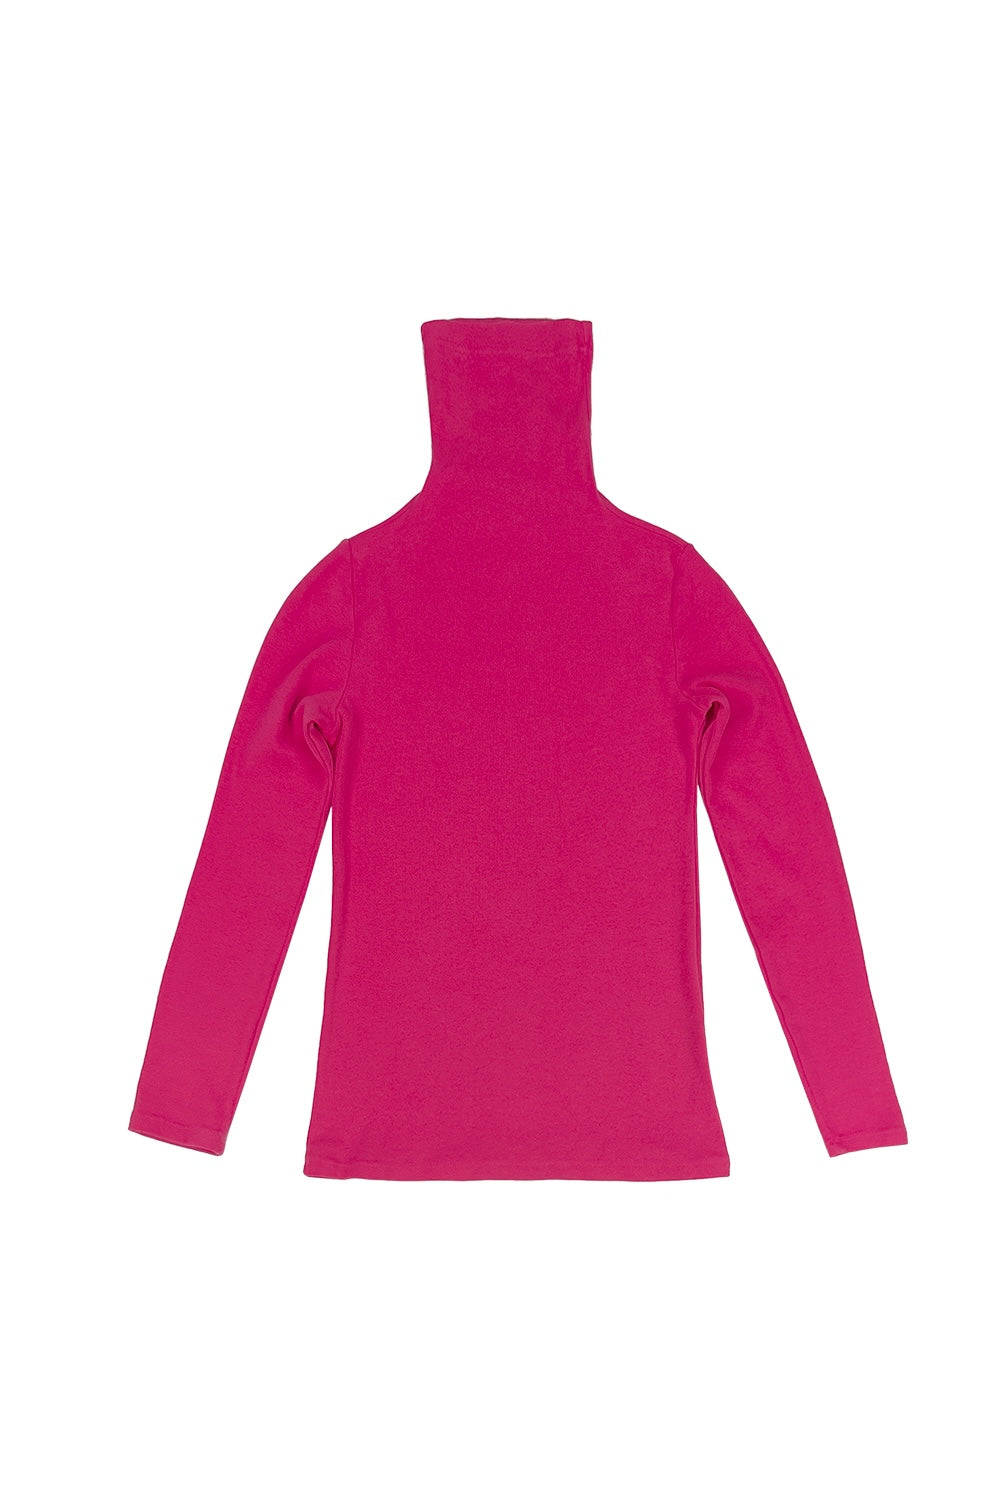 Whidbey Turtleneck | Jungmaven Hemp Clothing & Accessories / Color: Pink Grapefruit